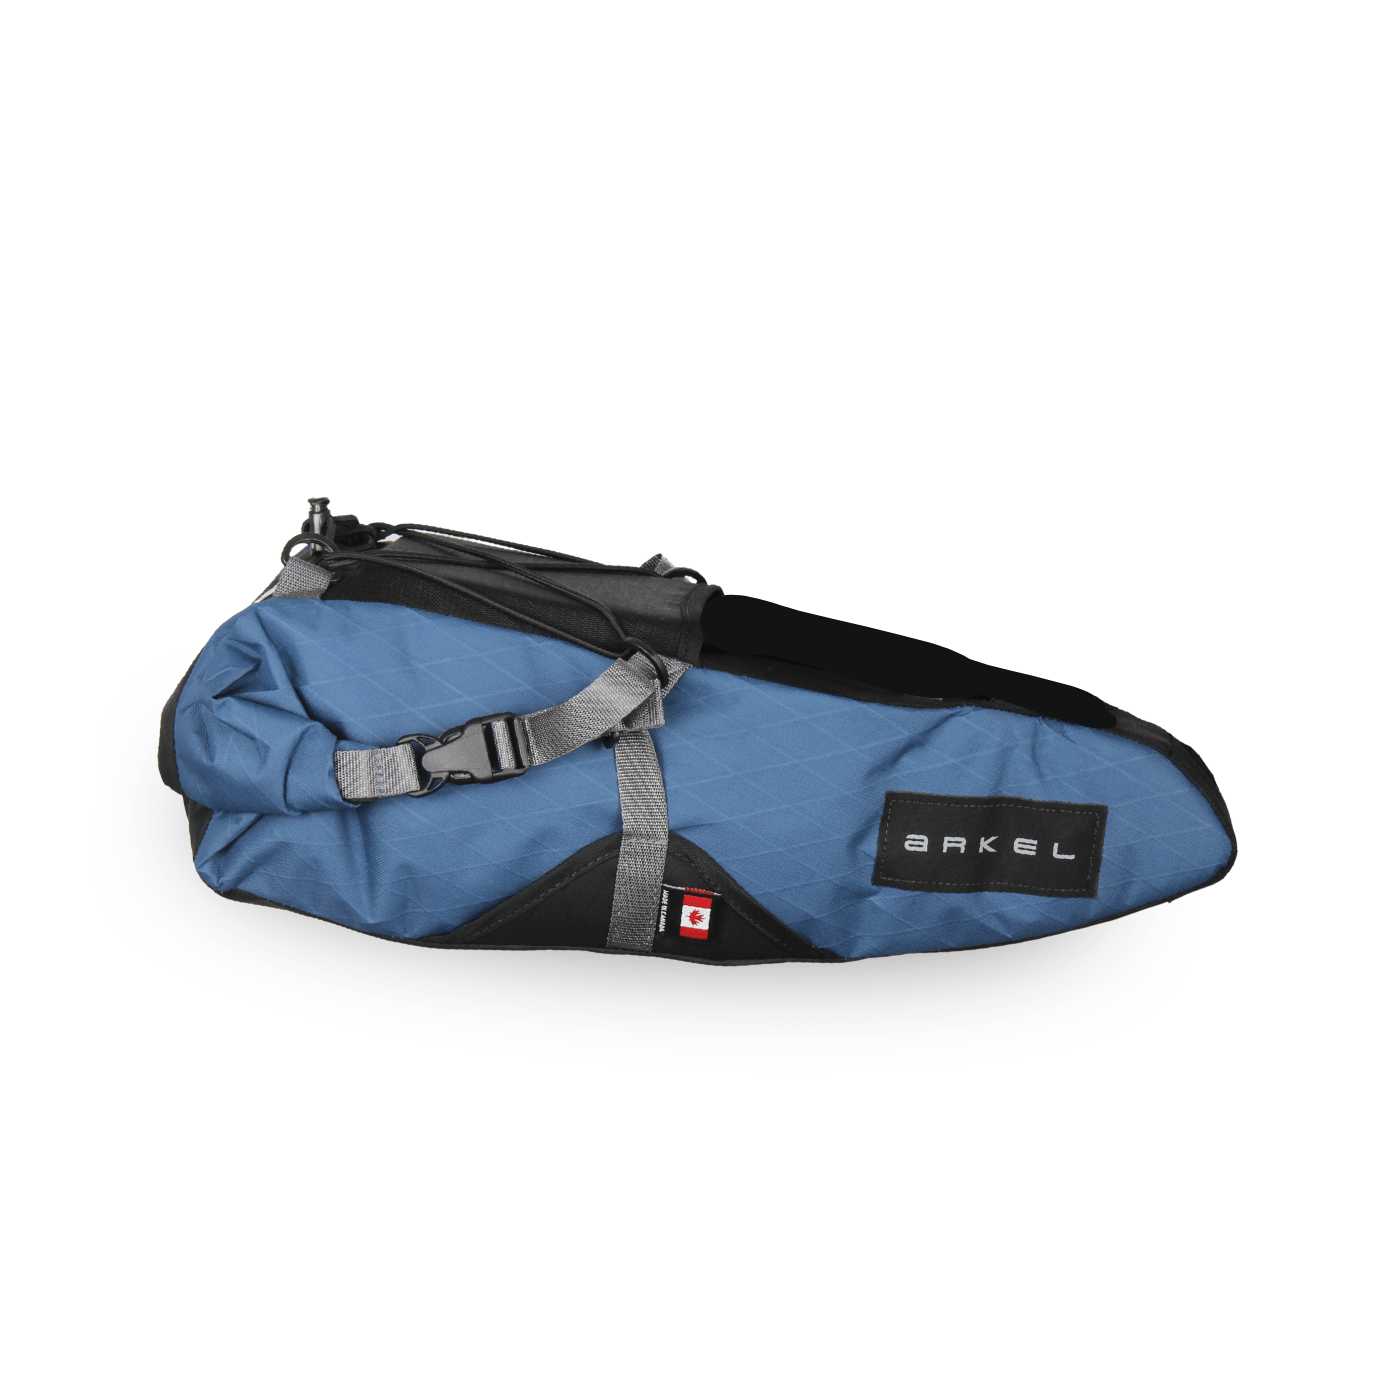 Arkel Bike Bags Small (9 L) / XPac Ocean Blue Seatpacker Bag - WITHOUT Hanger